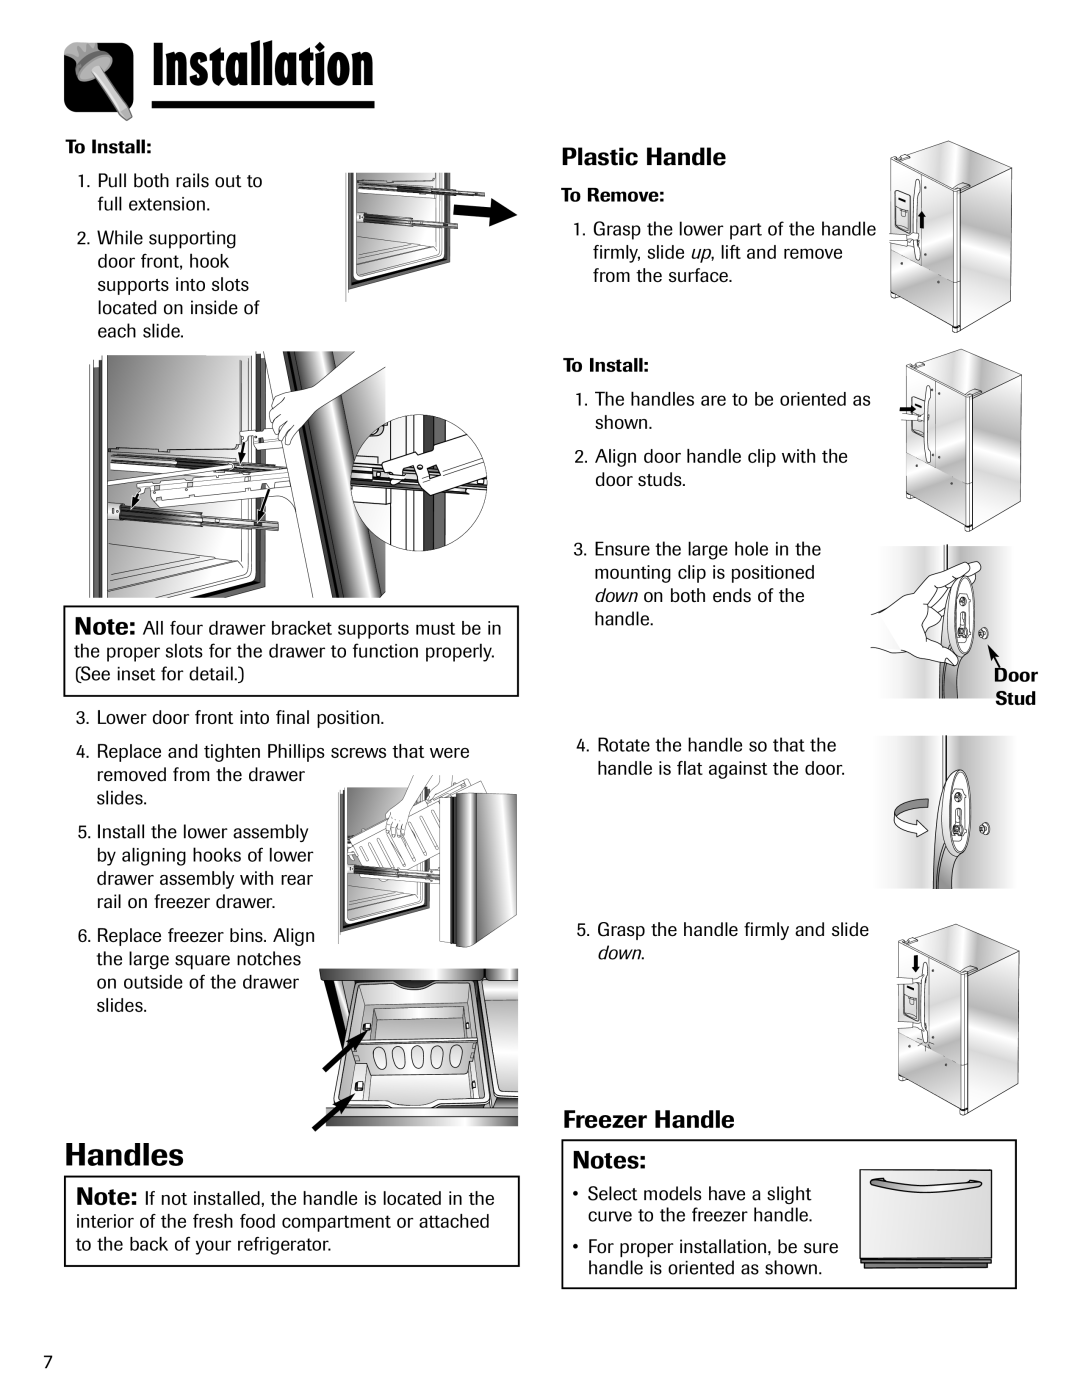 Maytag MFI2266AEW important safety instructions Handles, Plastic Handle, Freezer Handle, Installation 